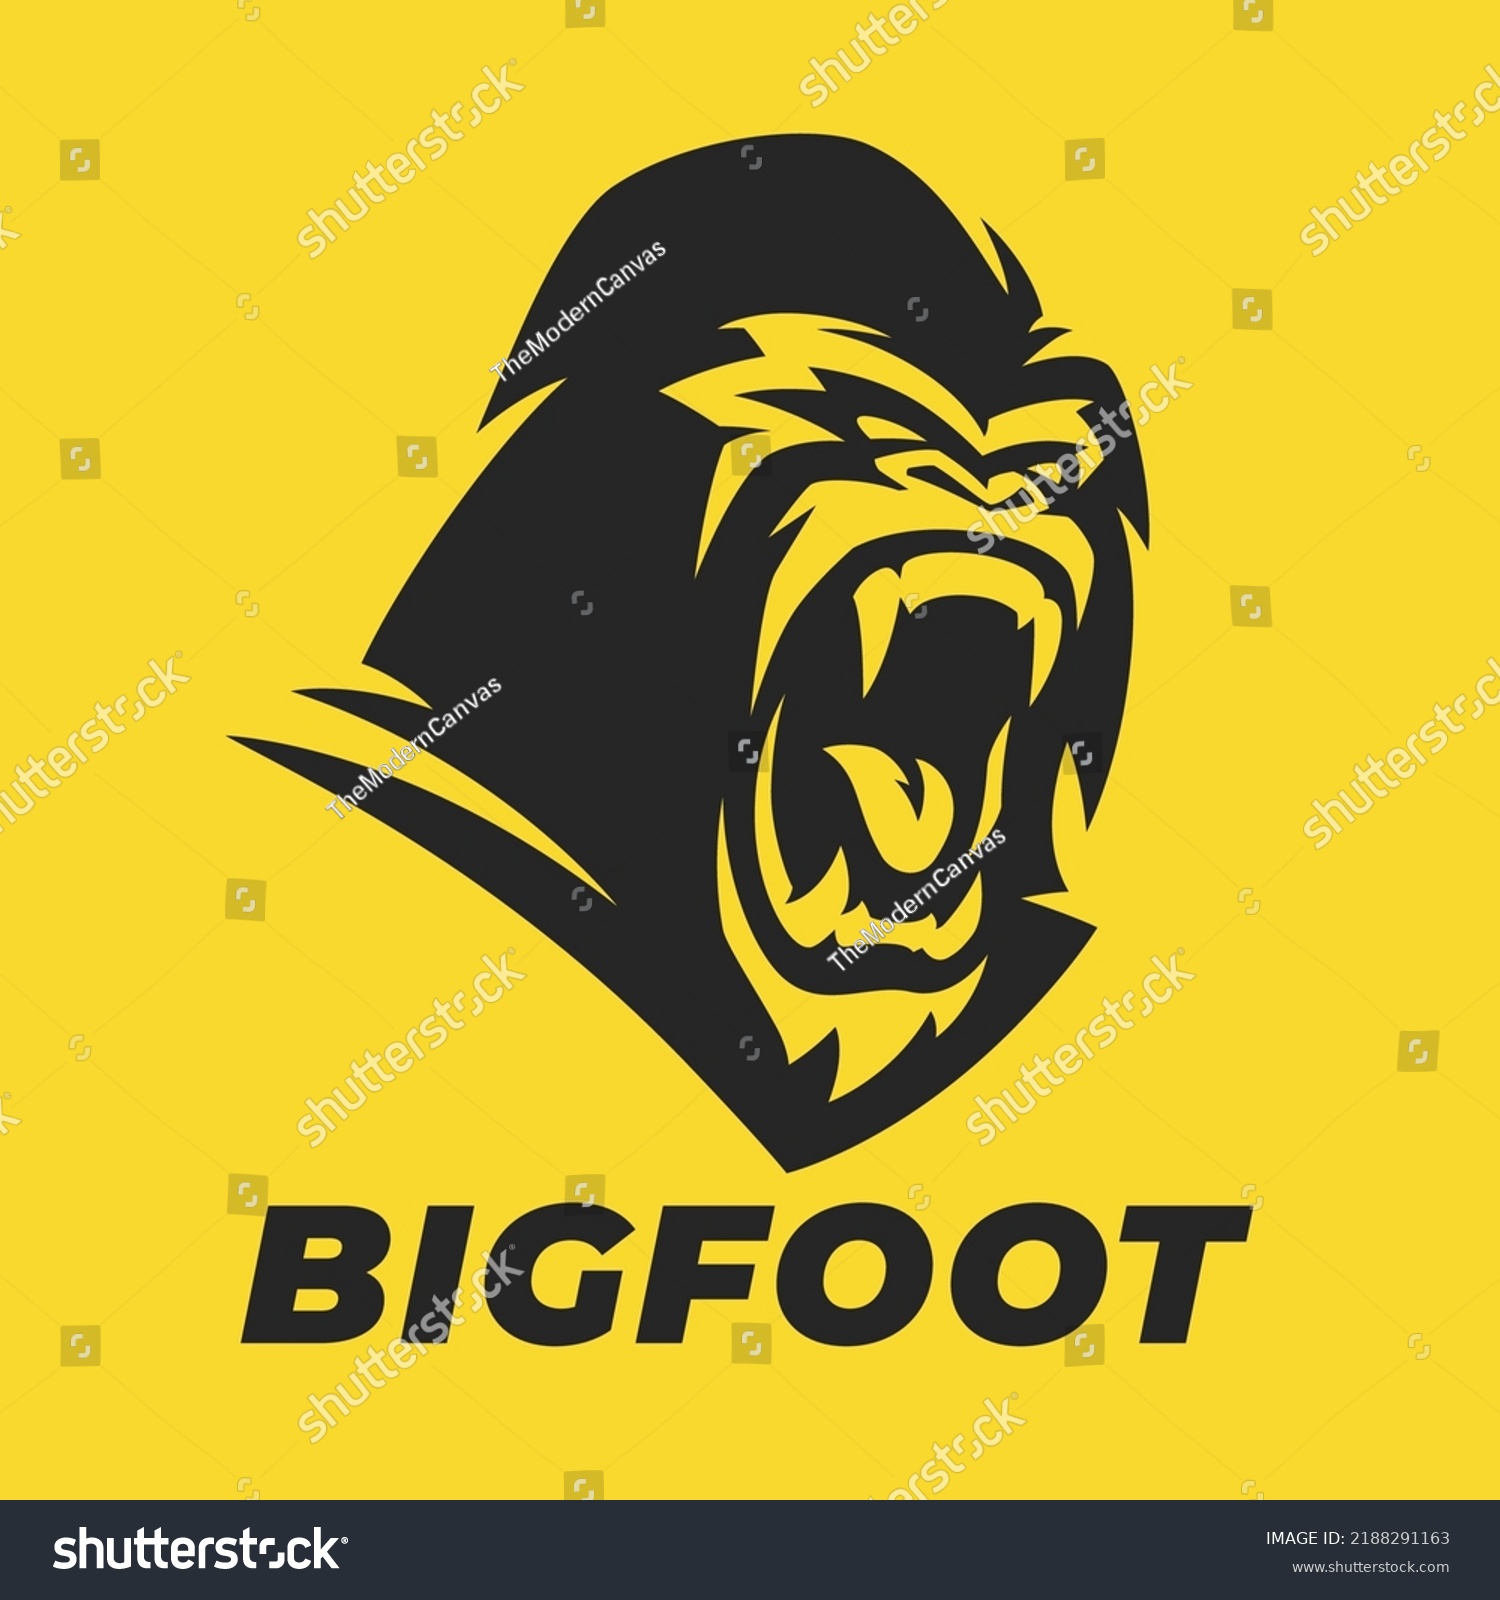 SVG of Silverback Gorilla scream logo. Angry bigfoot icon. Yeti symbol. Sasquatch emblem. Mythical cryptid ape creature face. Vector illustration. svg